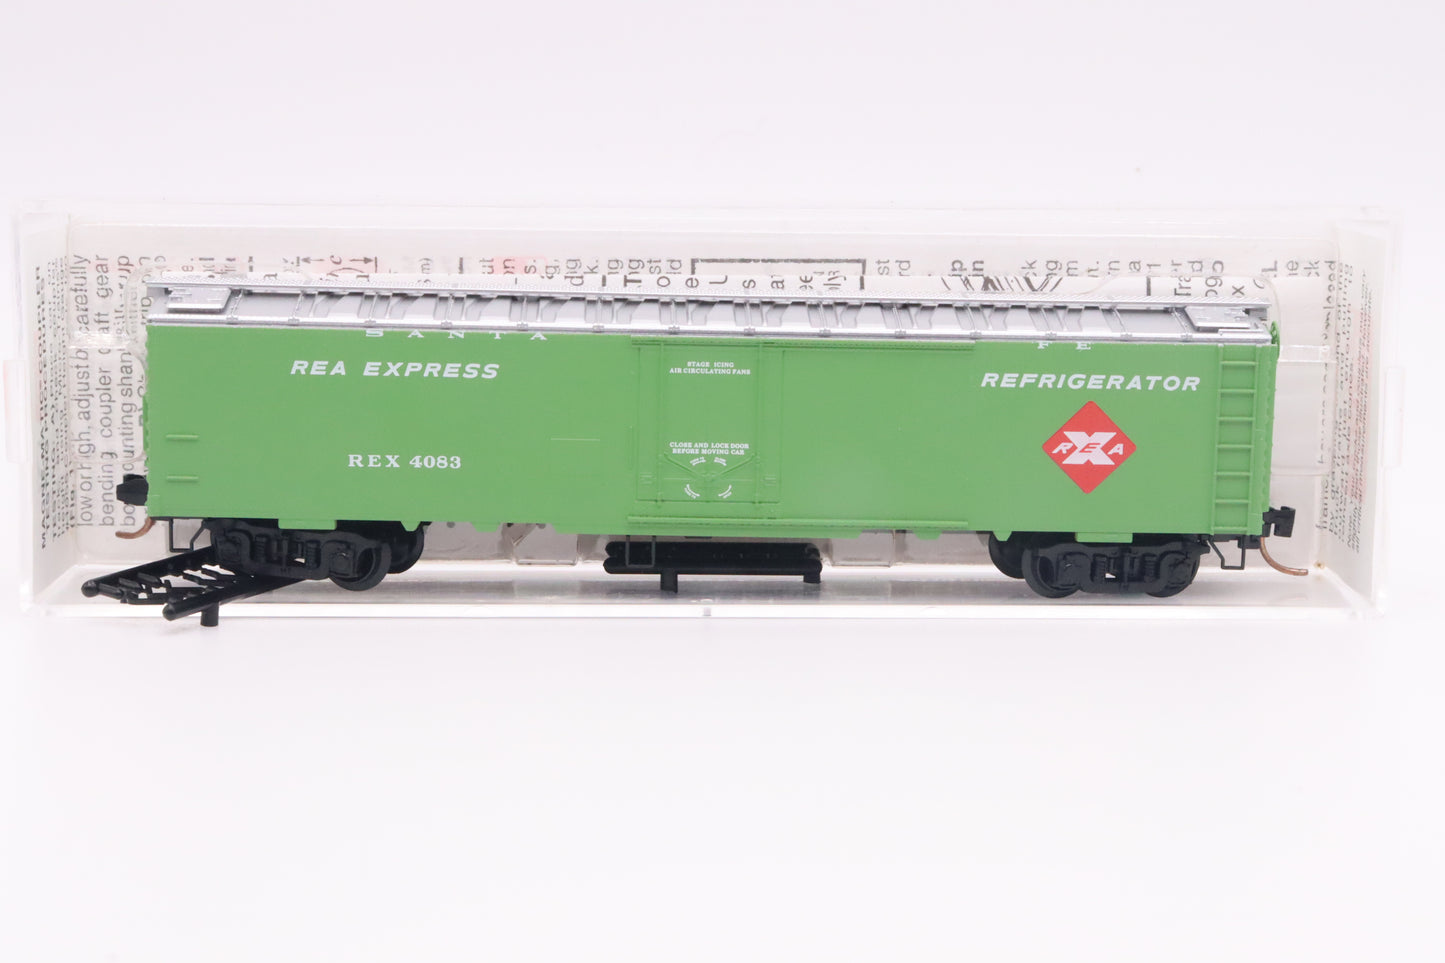 MTL-52030 - 52' 2" Riveted Steel Express Reefer w/Plug Door - Santa Fe / REA - REX-4083